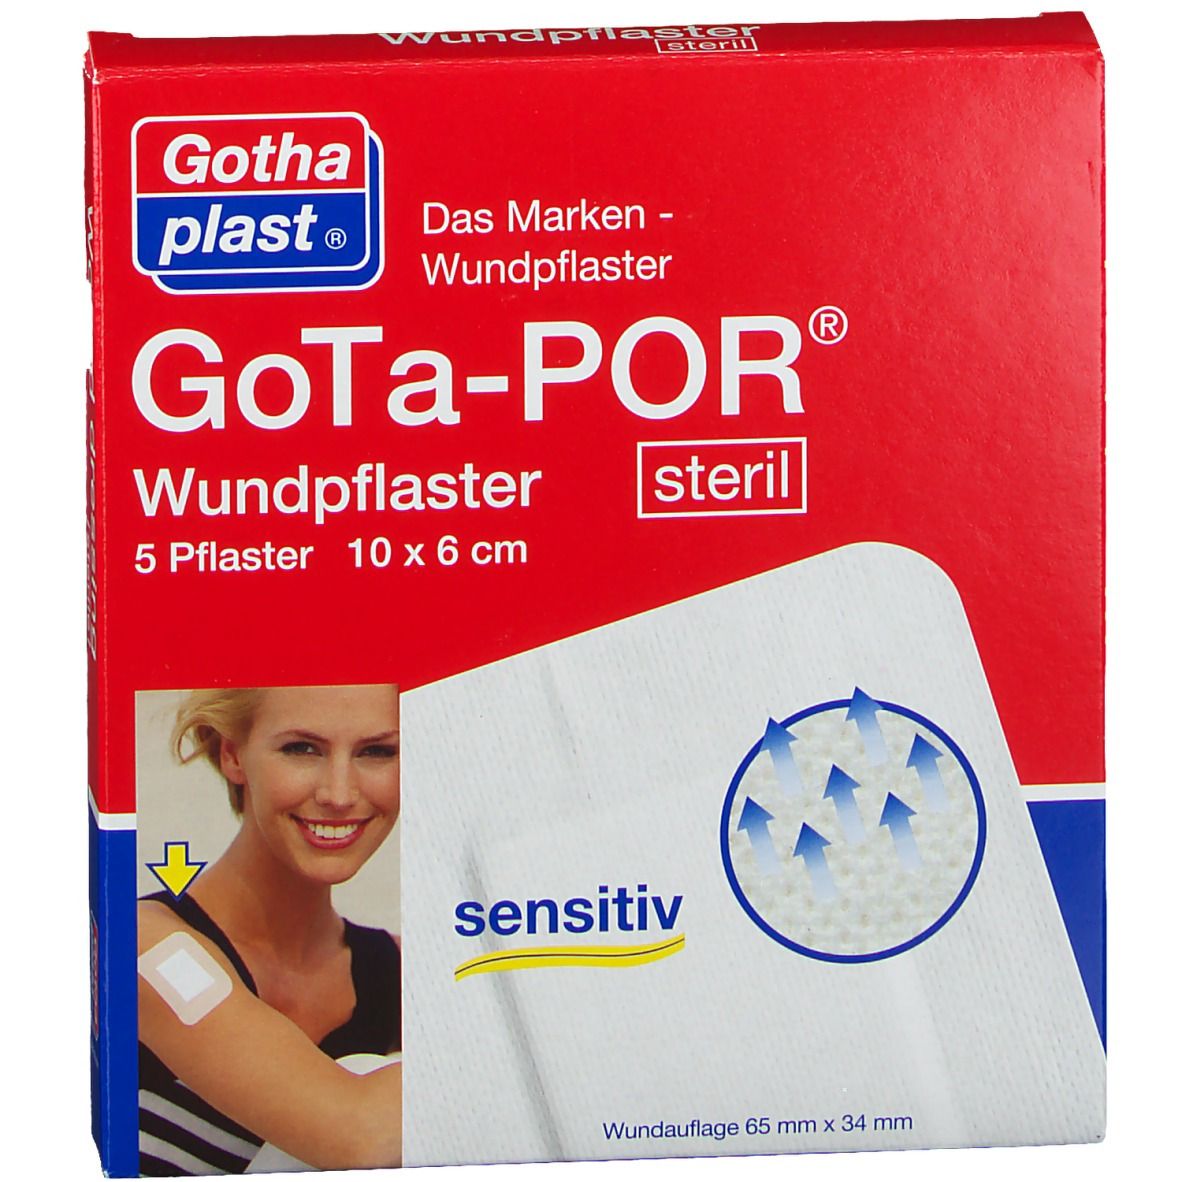 GoTa-POR® Wundpflaster steril 10 x 6 cm